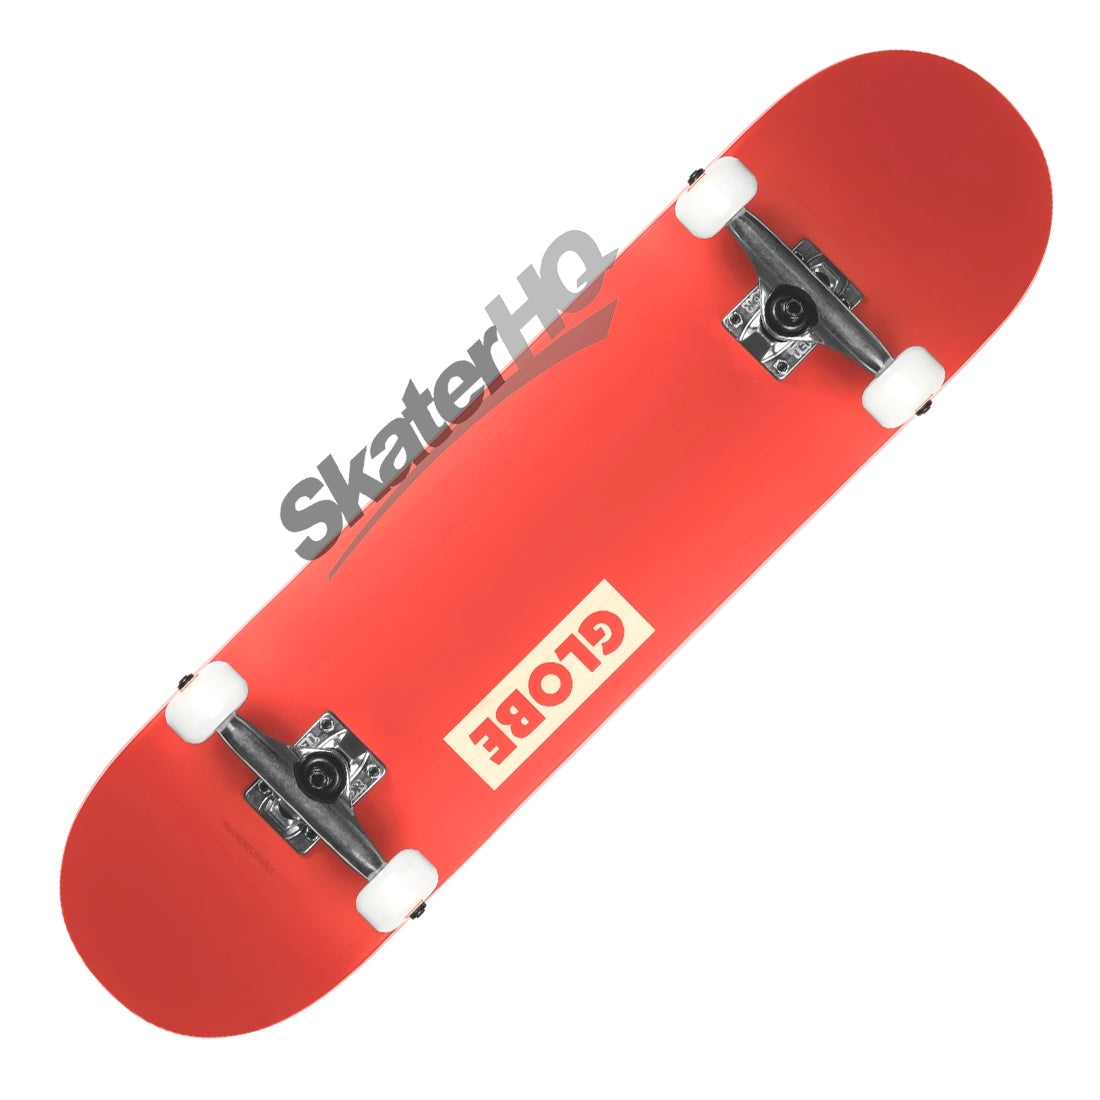 Globe Goodstock 7.75 Complete - Red Skateboard Completes Modern Street